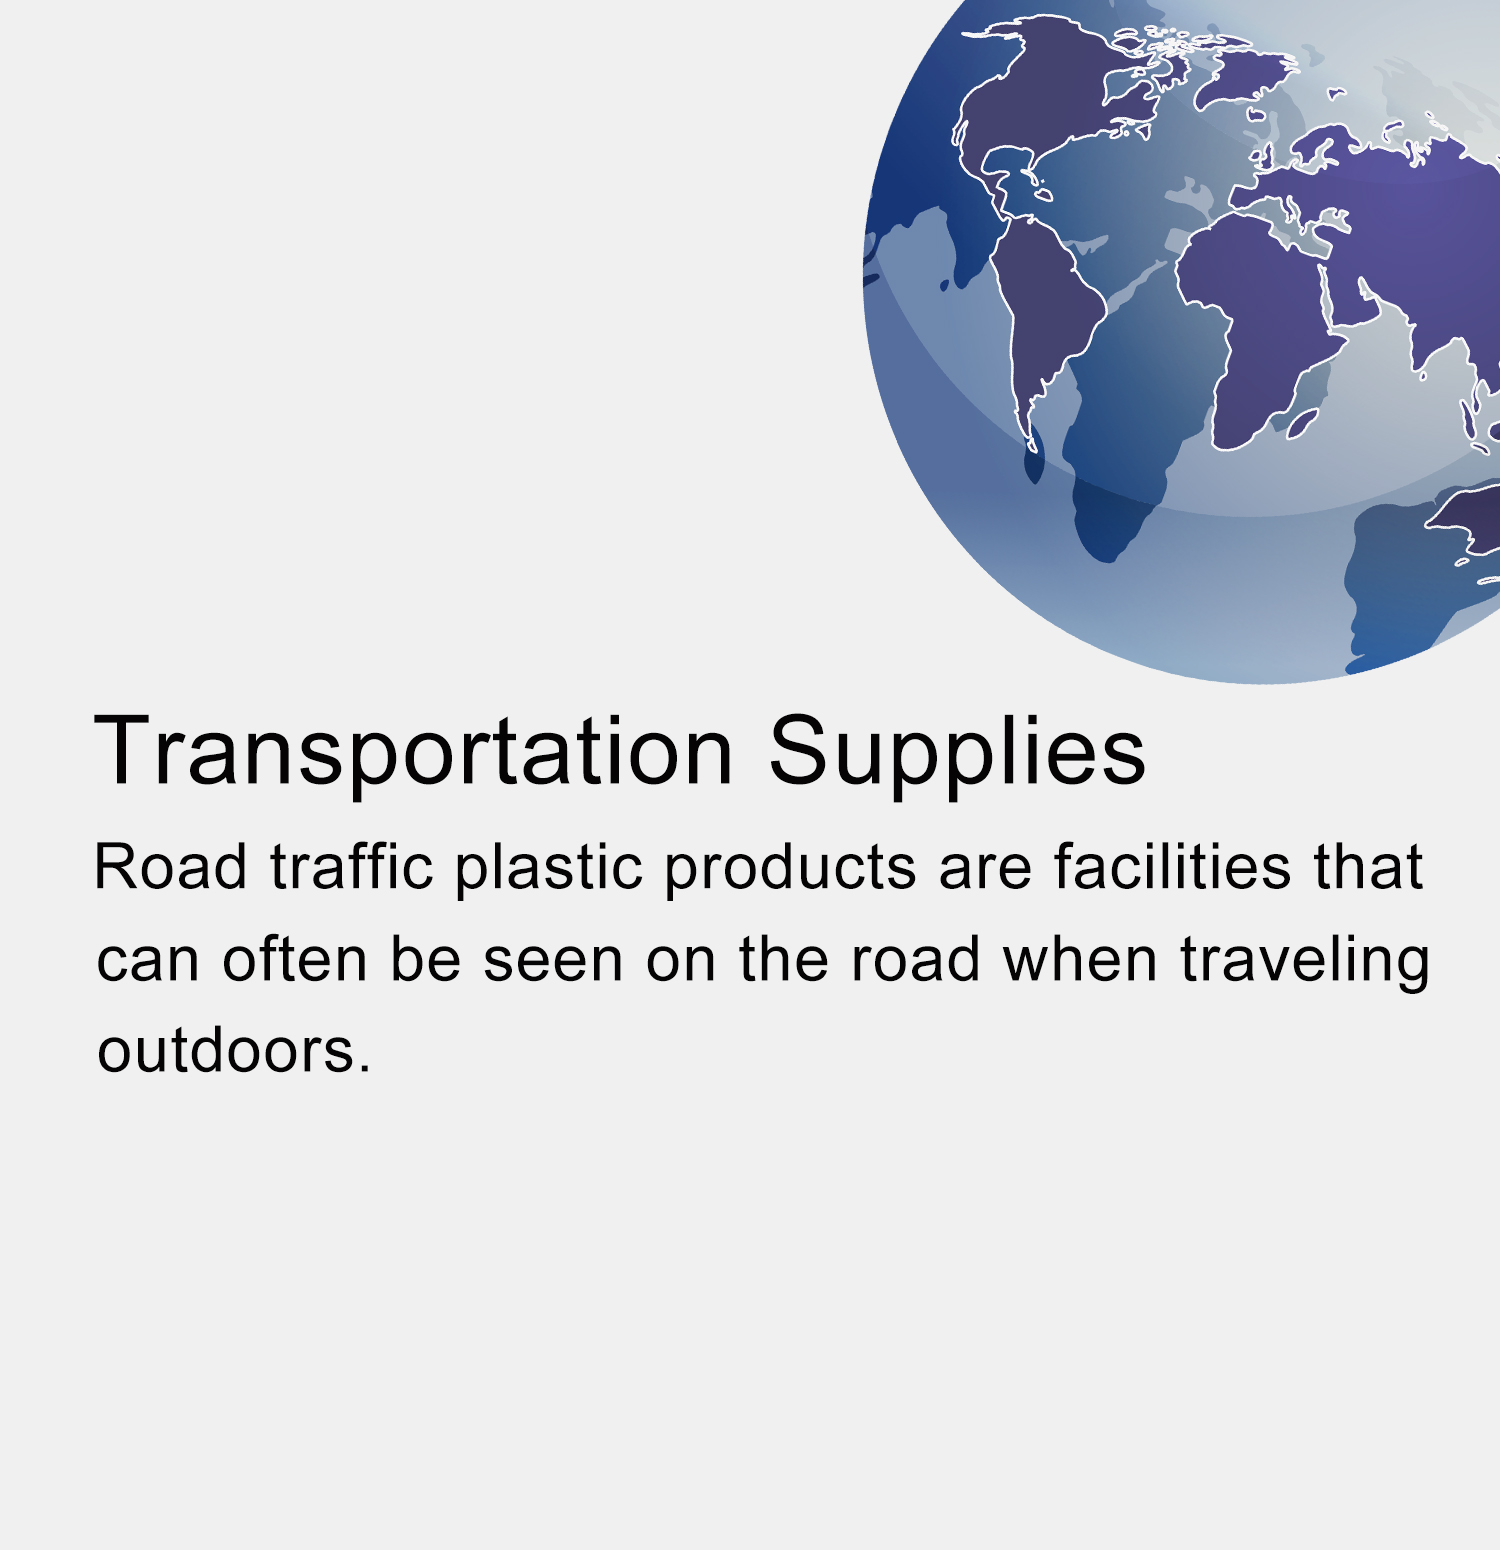 Transportation Supplies